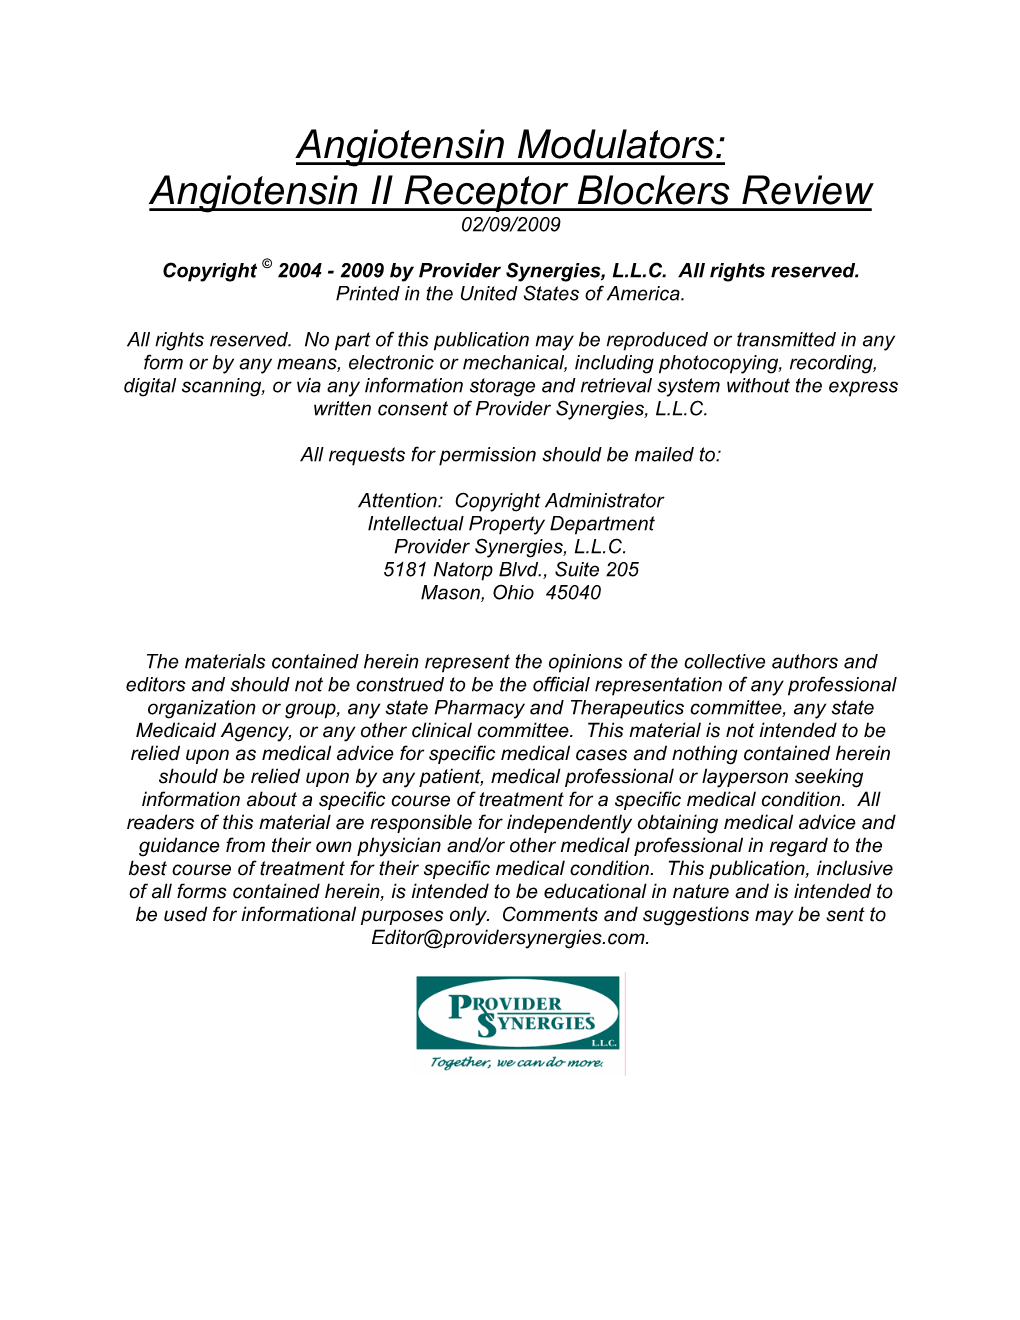 Angiotensin Modulators: Angiotensin II Receptor Blockers Review 02/09/2009